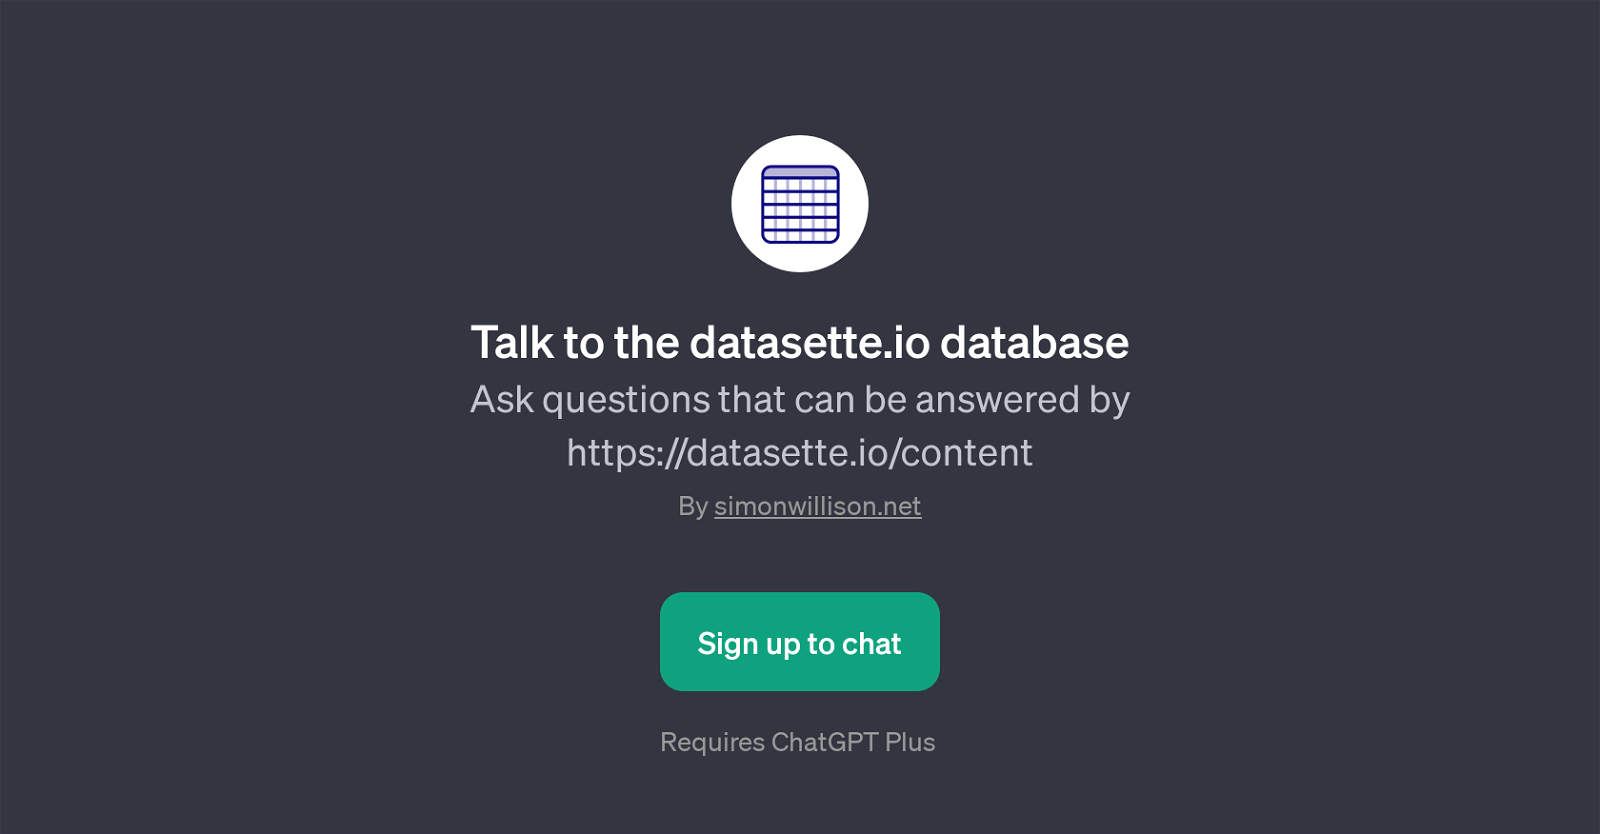 Talk to the datasette.io database website